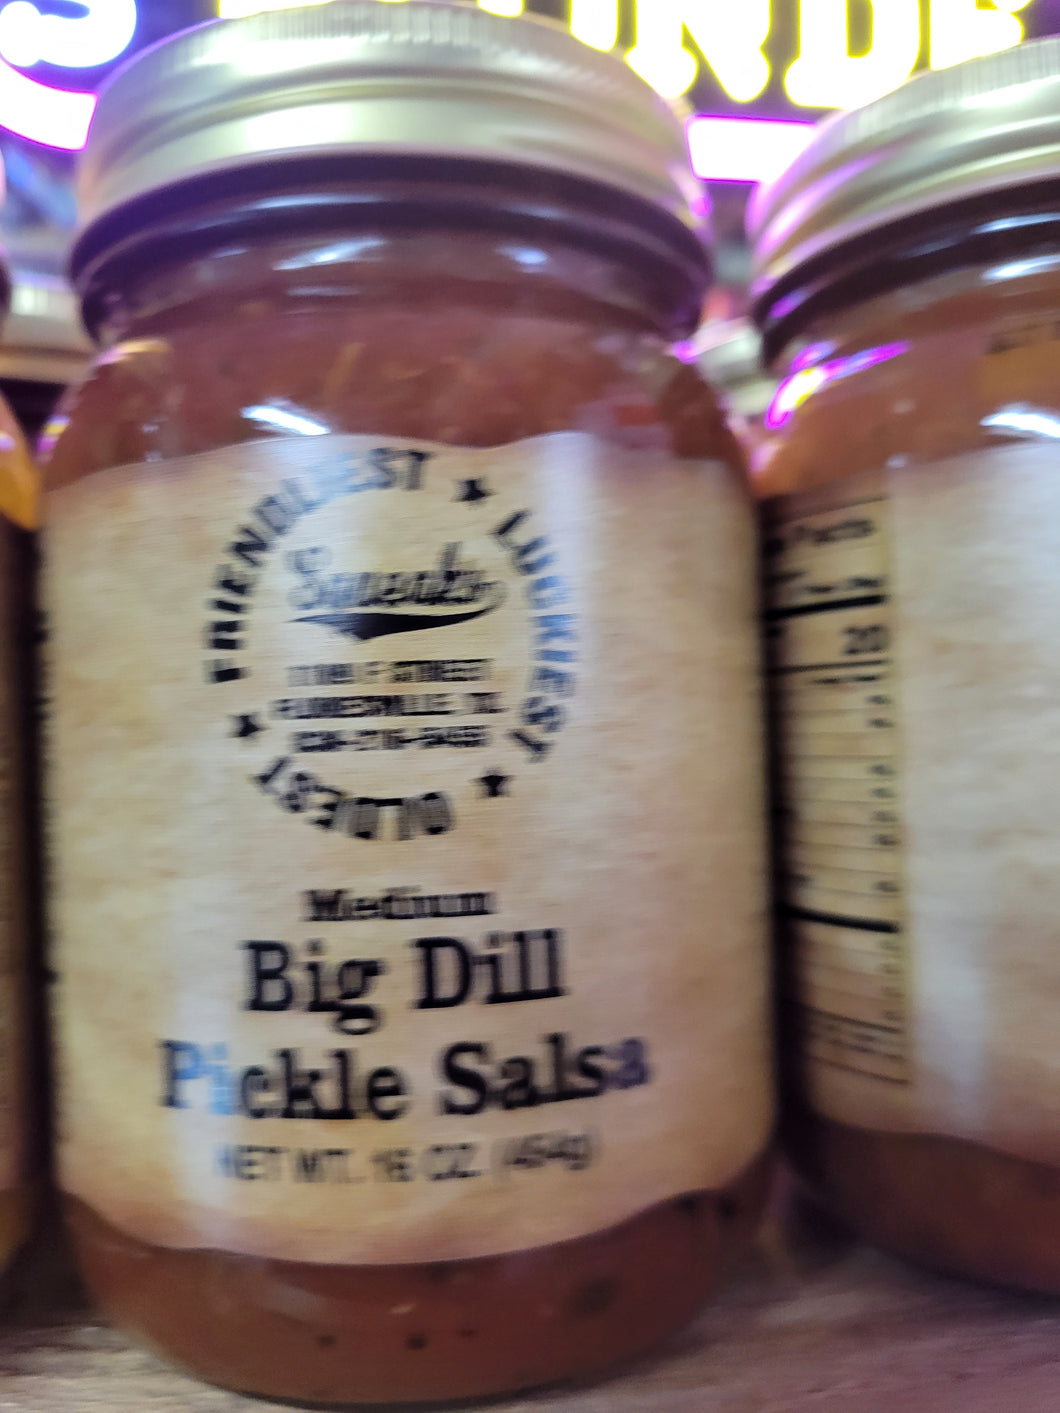 Squeak's Big Dill Pickle Salsa